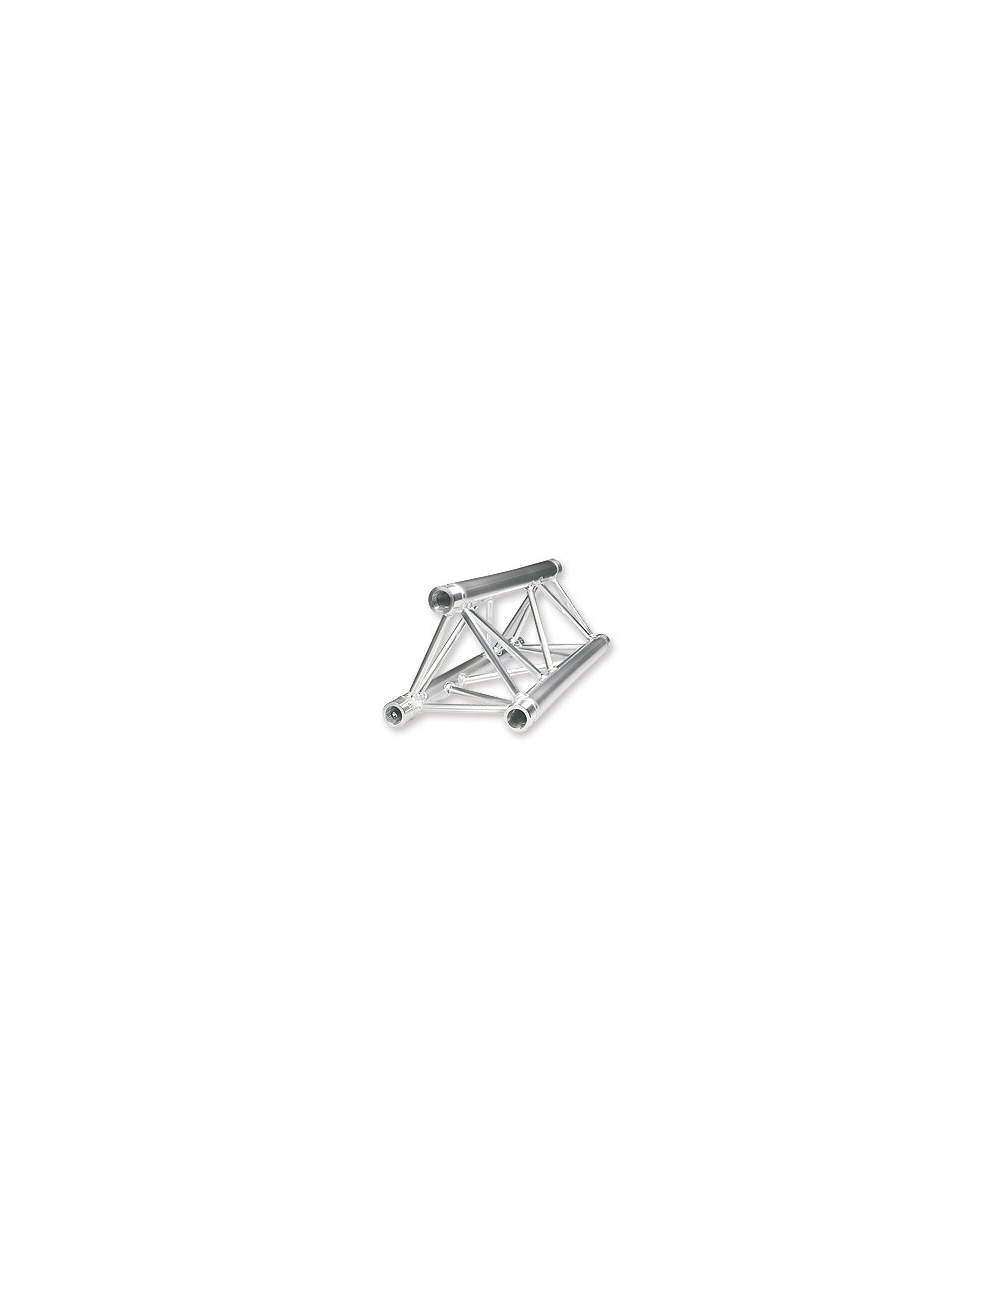 Triangular structure 290 ASD 0m71 - SX29071